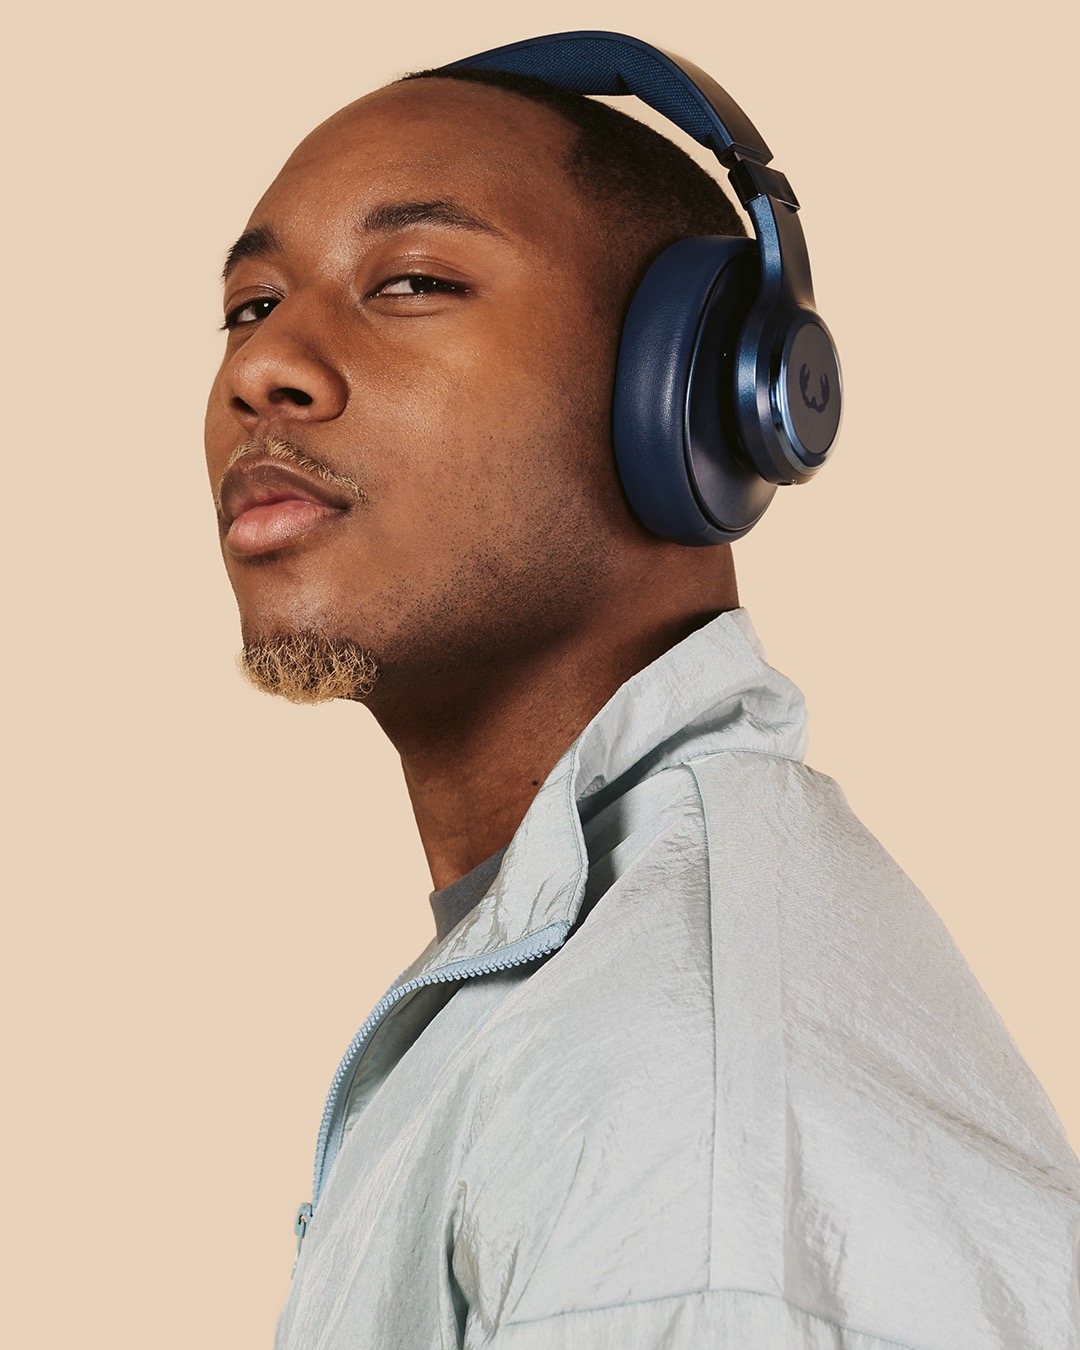 Fresh 'n Rebel - Clam Elite - Wireless over-ear headphones with digital noise cancelling - Steel Blue